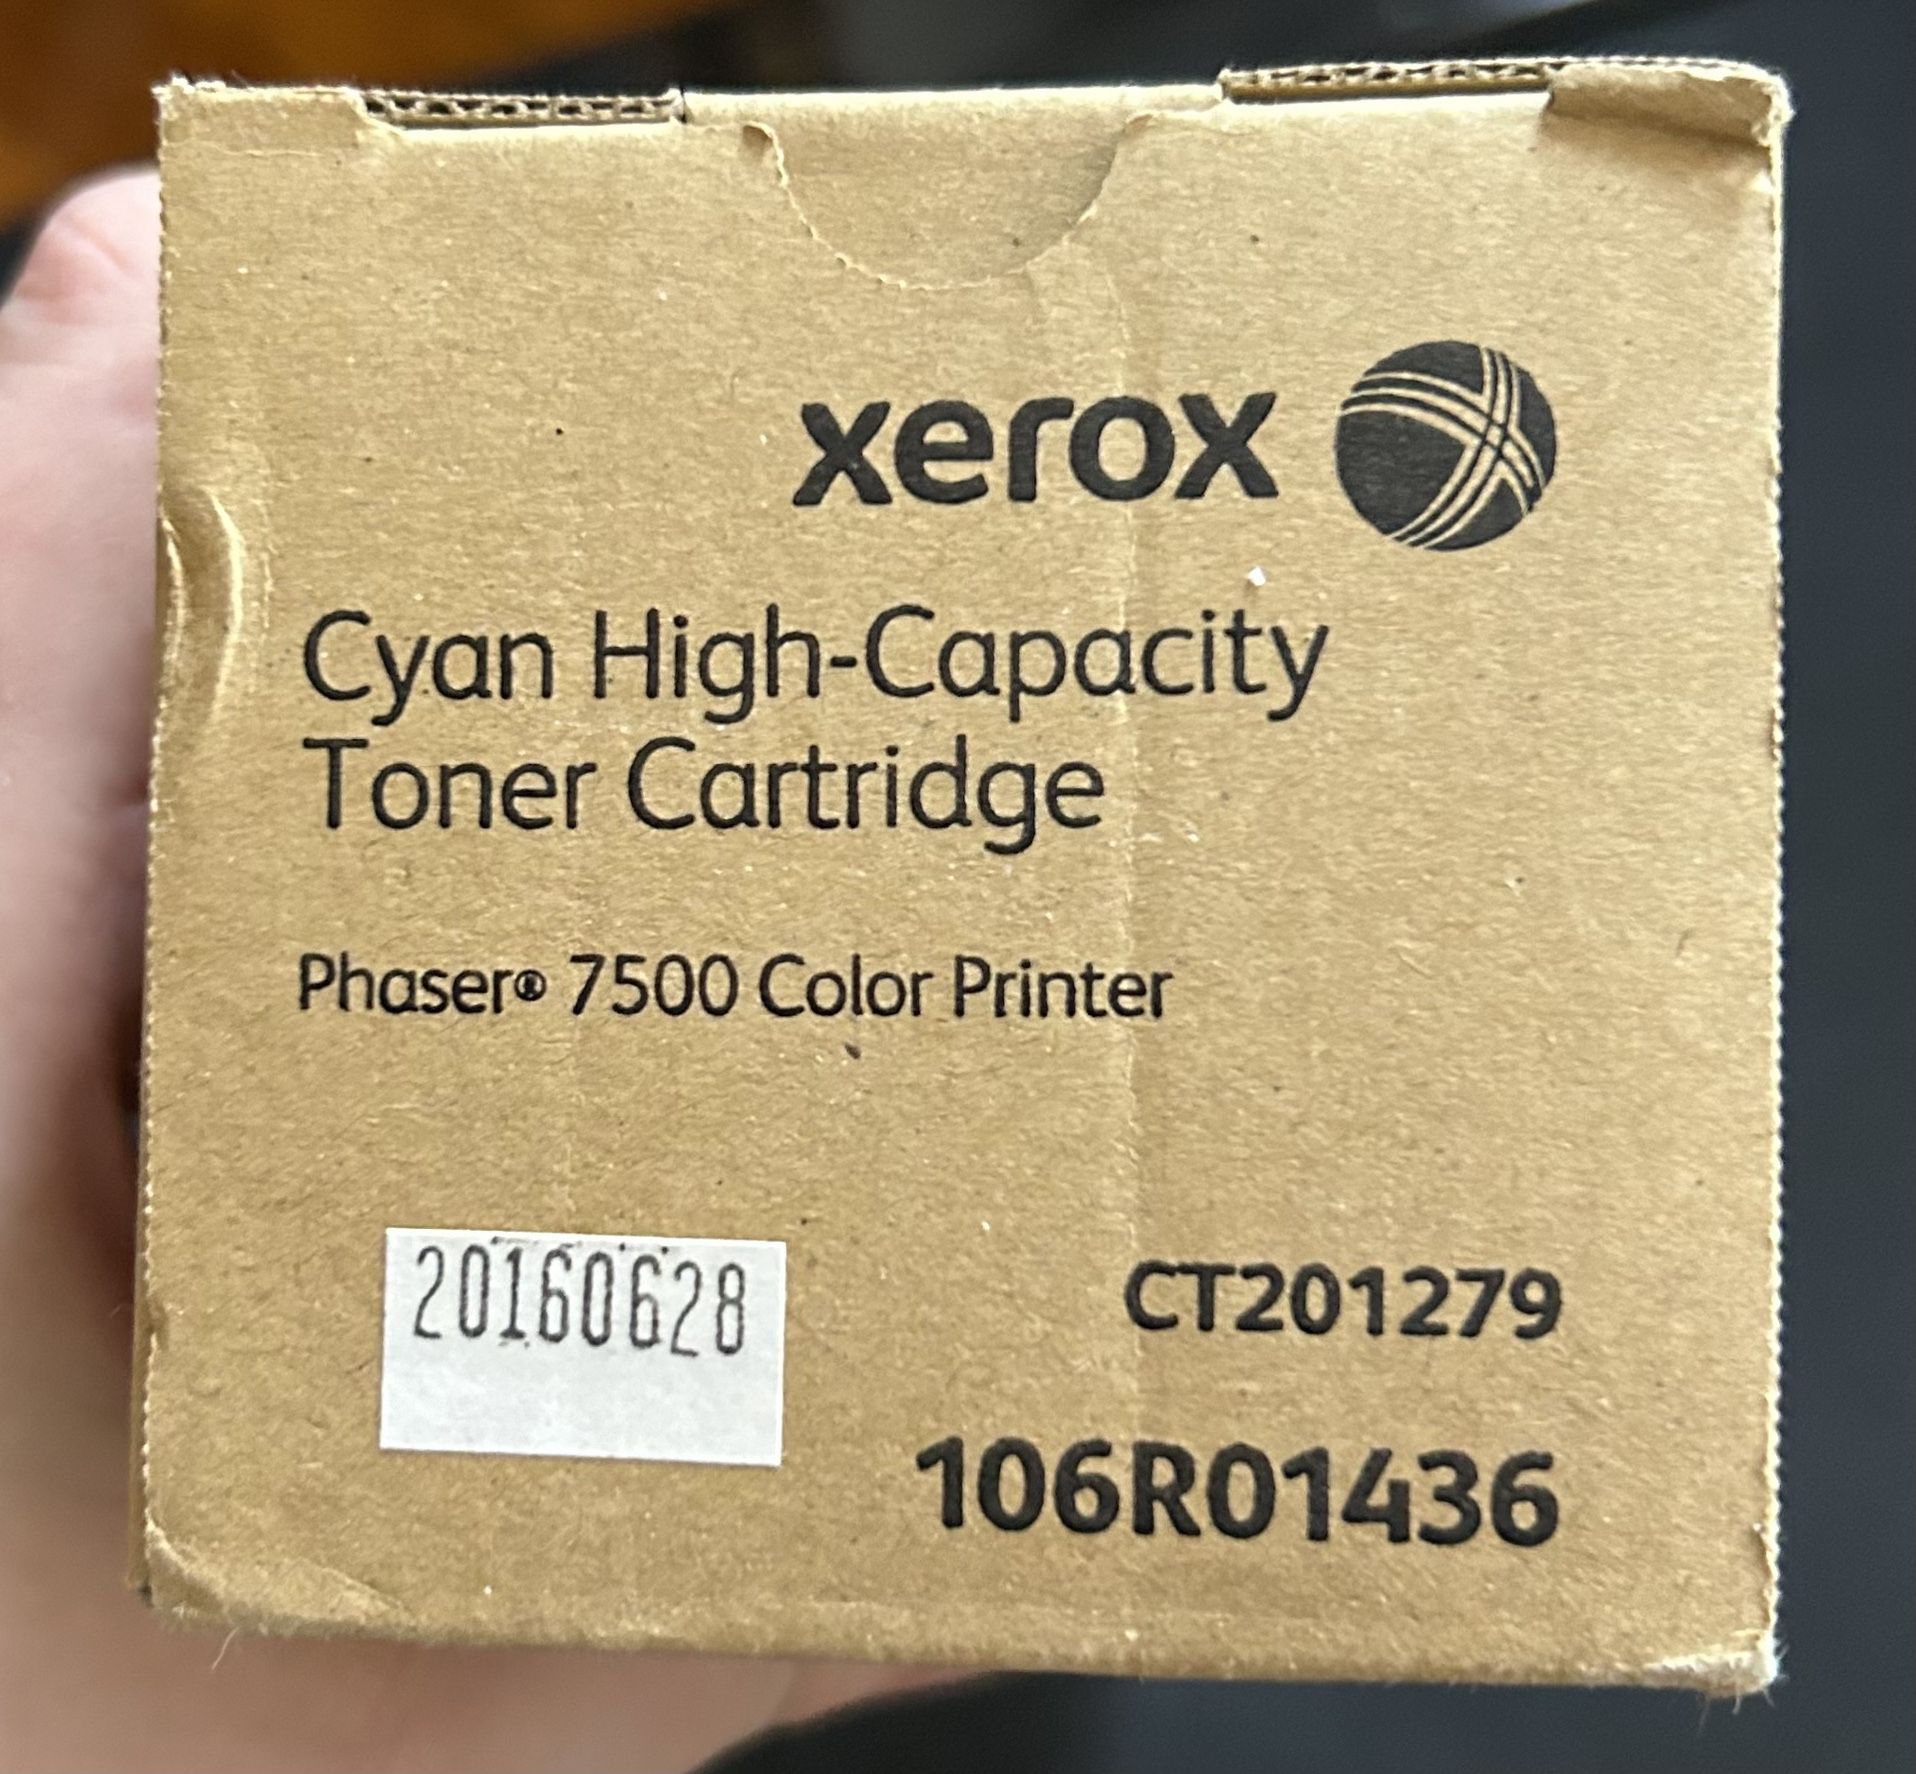 NEW IN BOX  Xerox Cyan High-Capacity Toner Catridge Phaser 7500 Color Printer